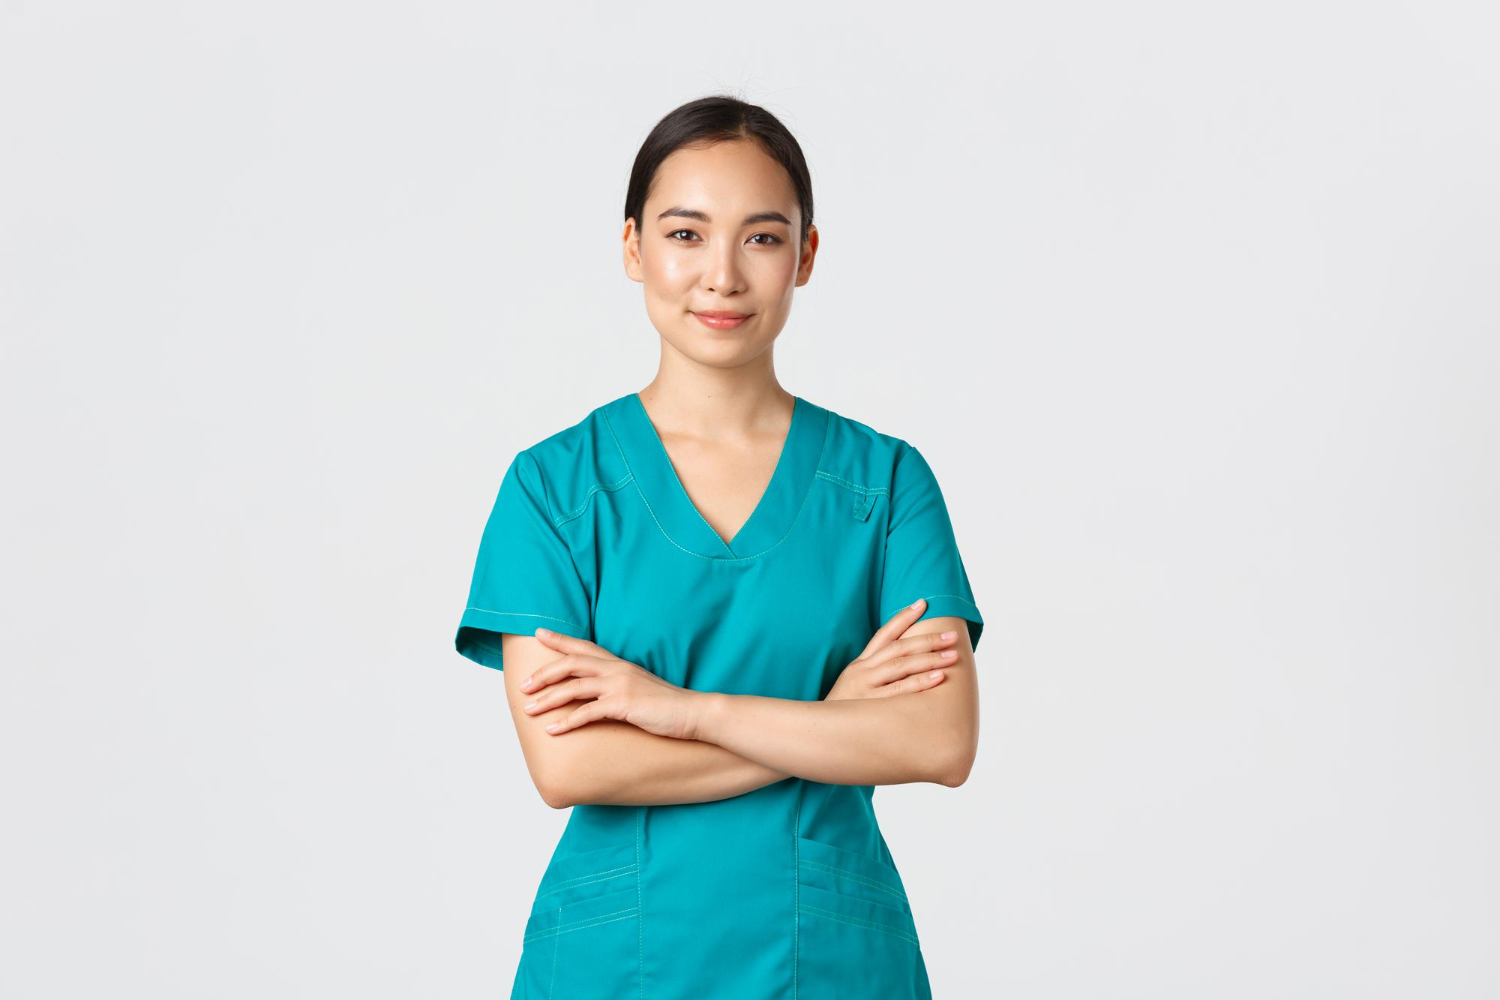 nurse with crossed arms - 8 Things to Consider Before Choosing a Nursing Program